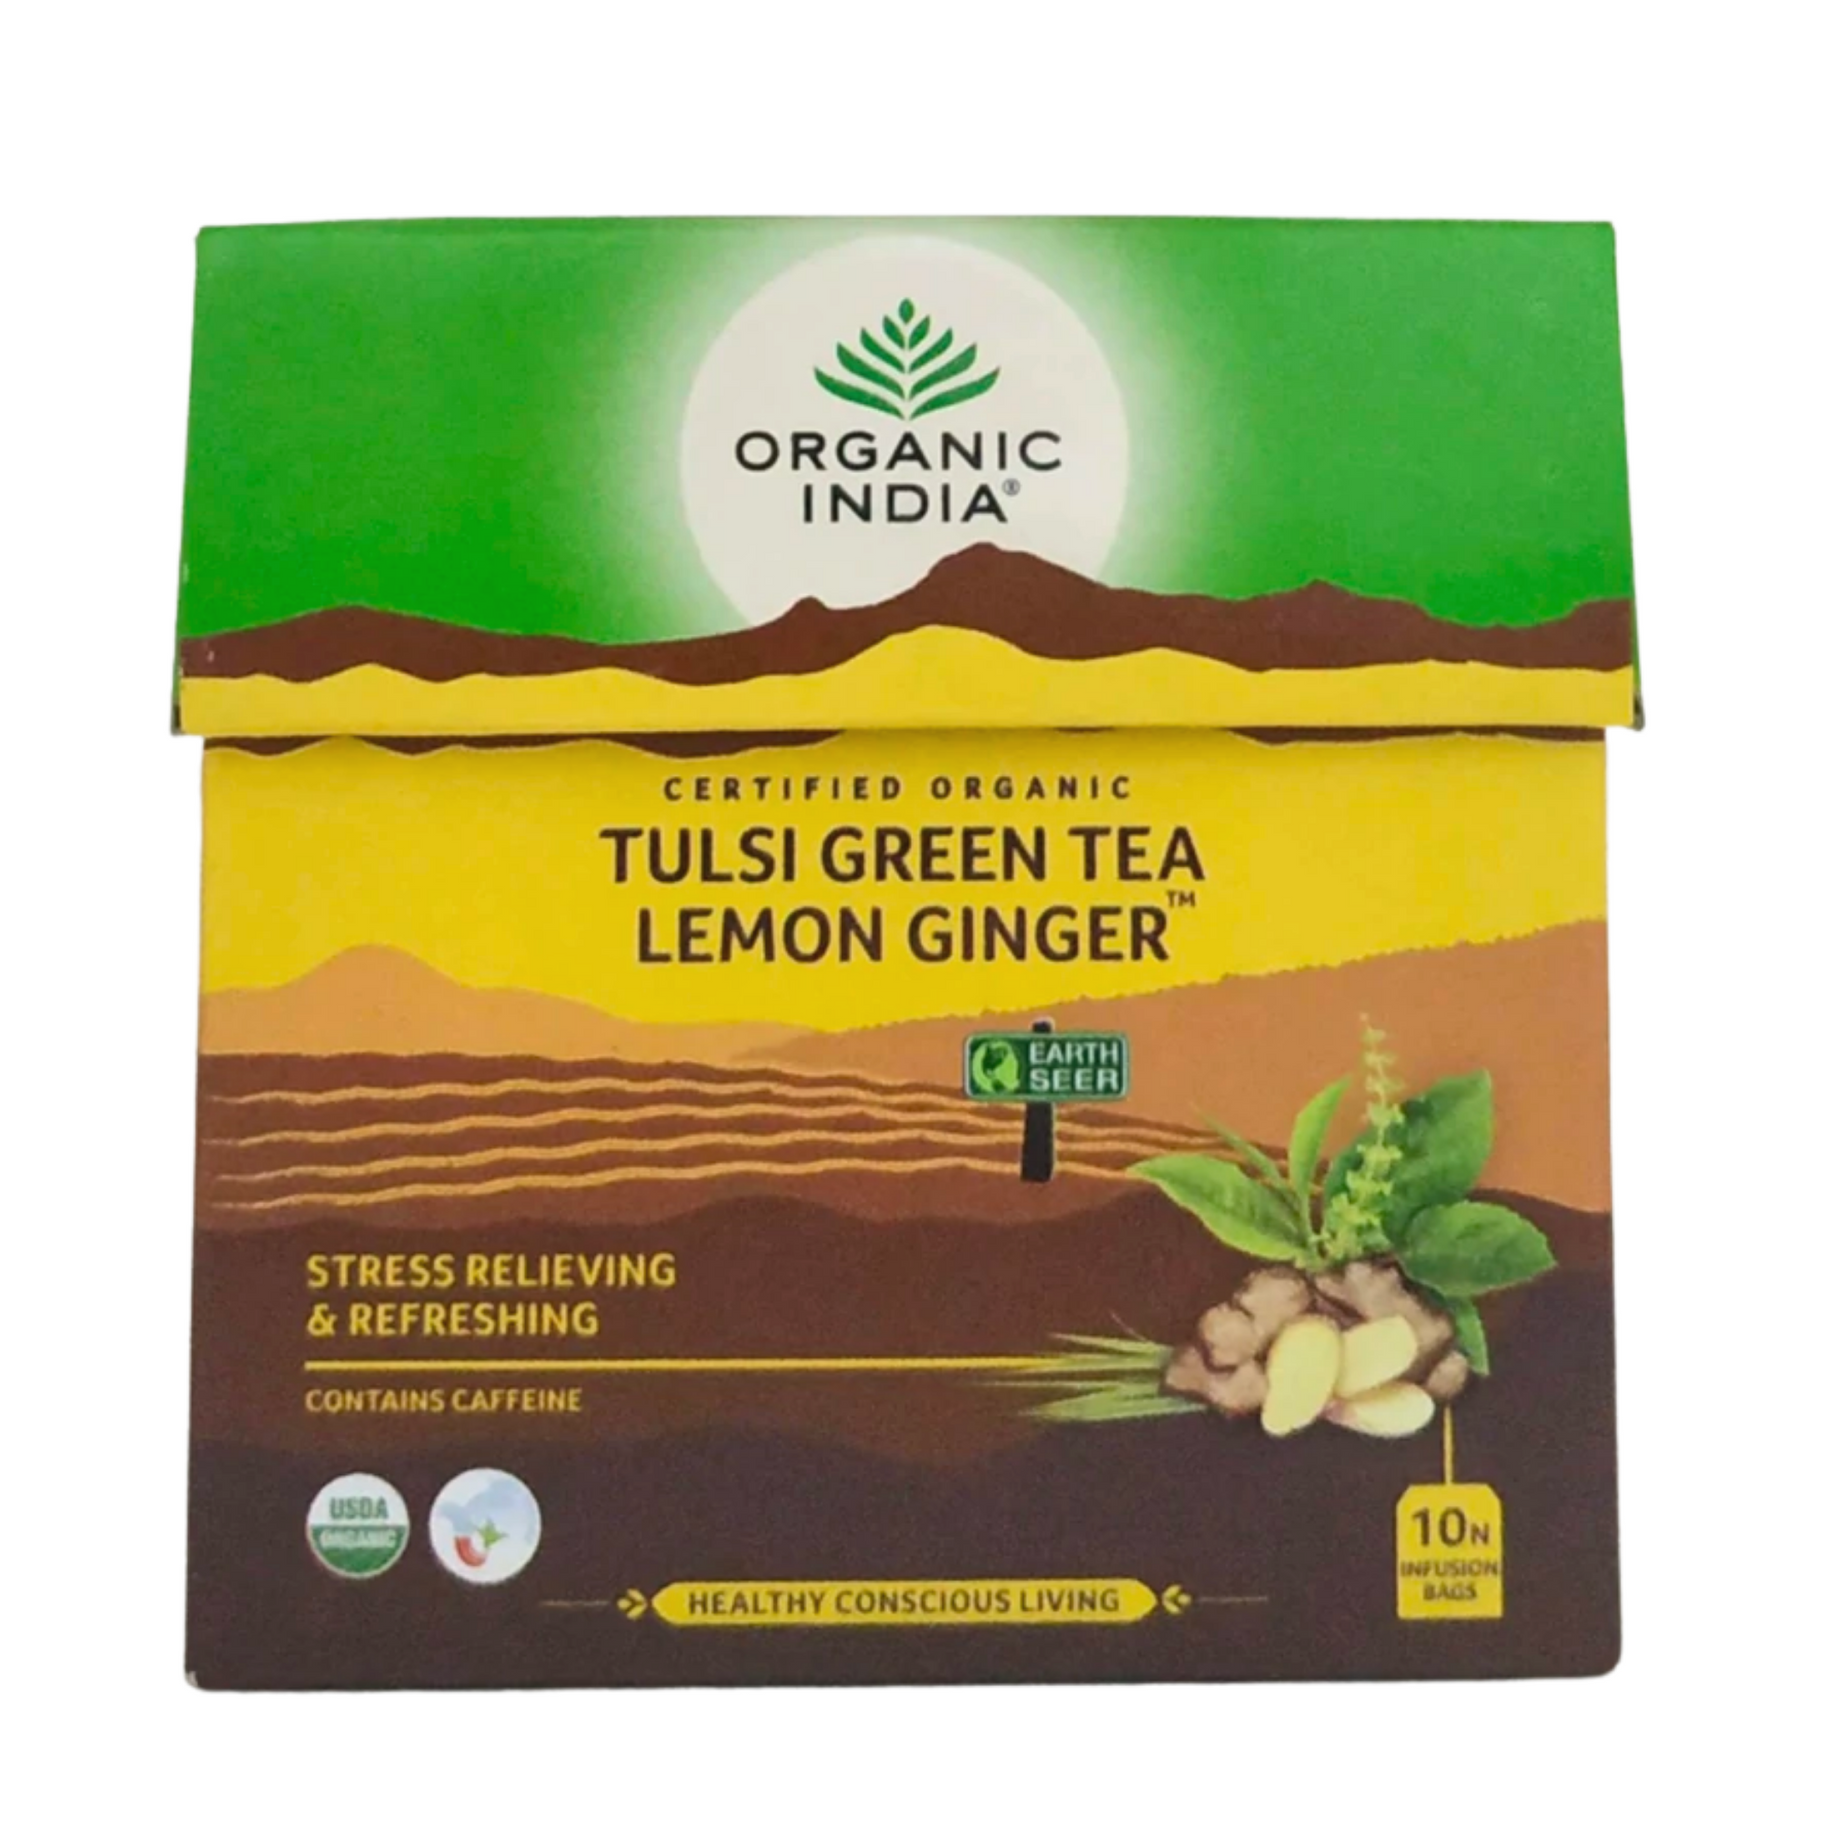 Shop Tulsi Green Tea - Lemon Ginger - 10 Sachets at price 82.00 from Organic India Online - Ayush Care